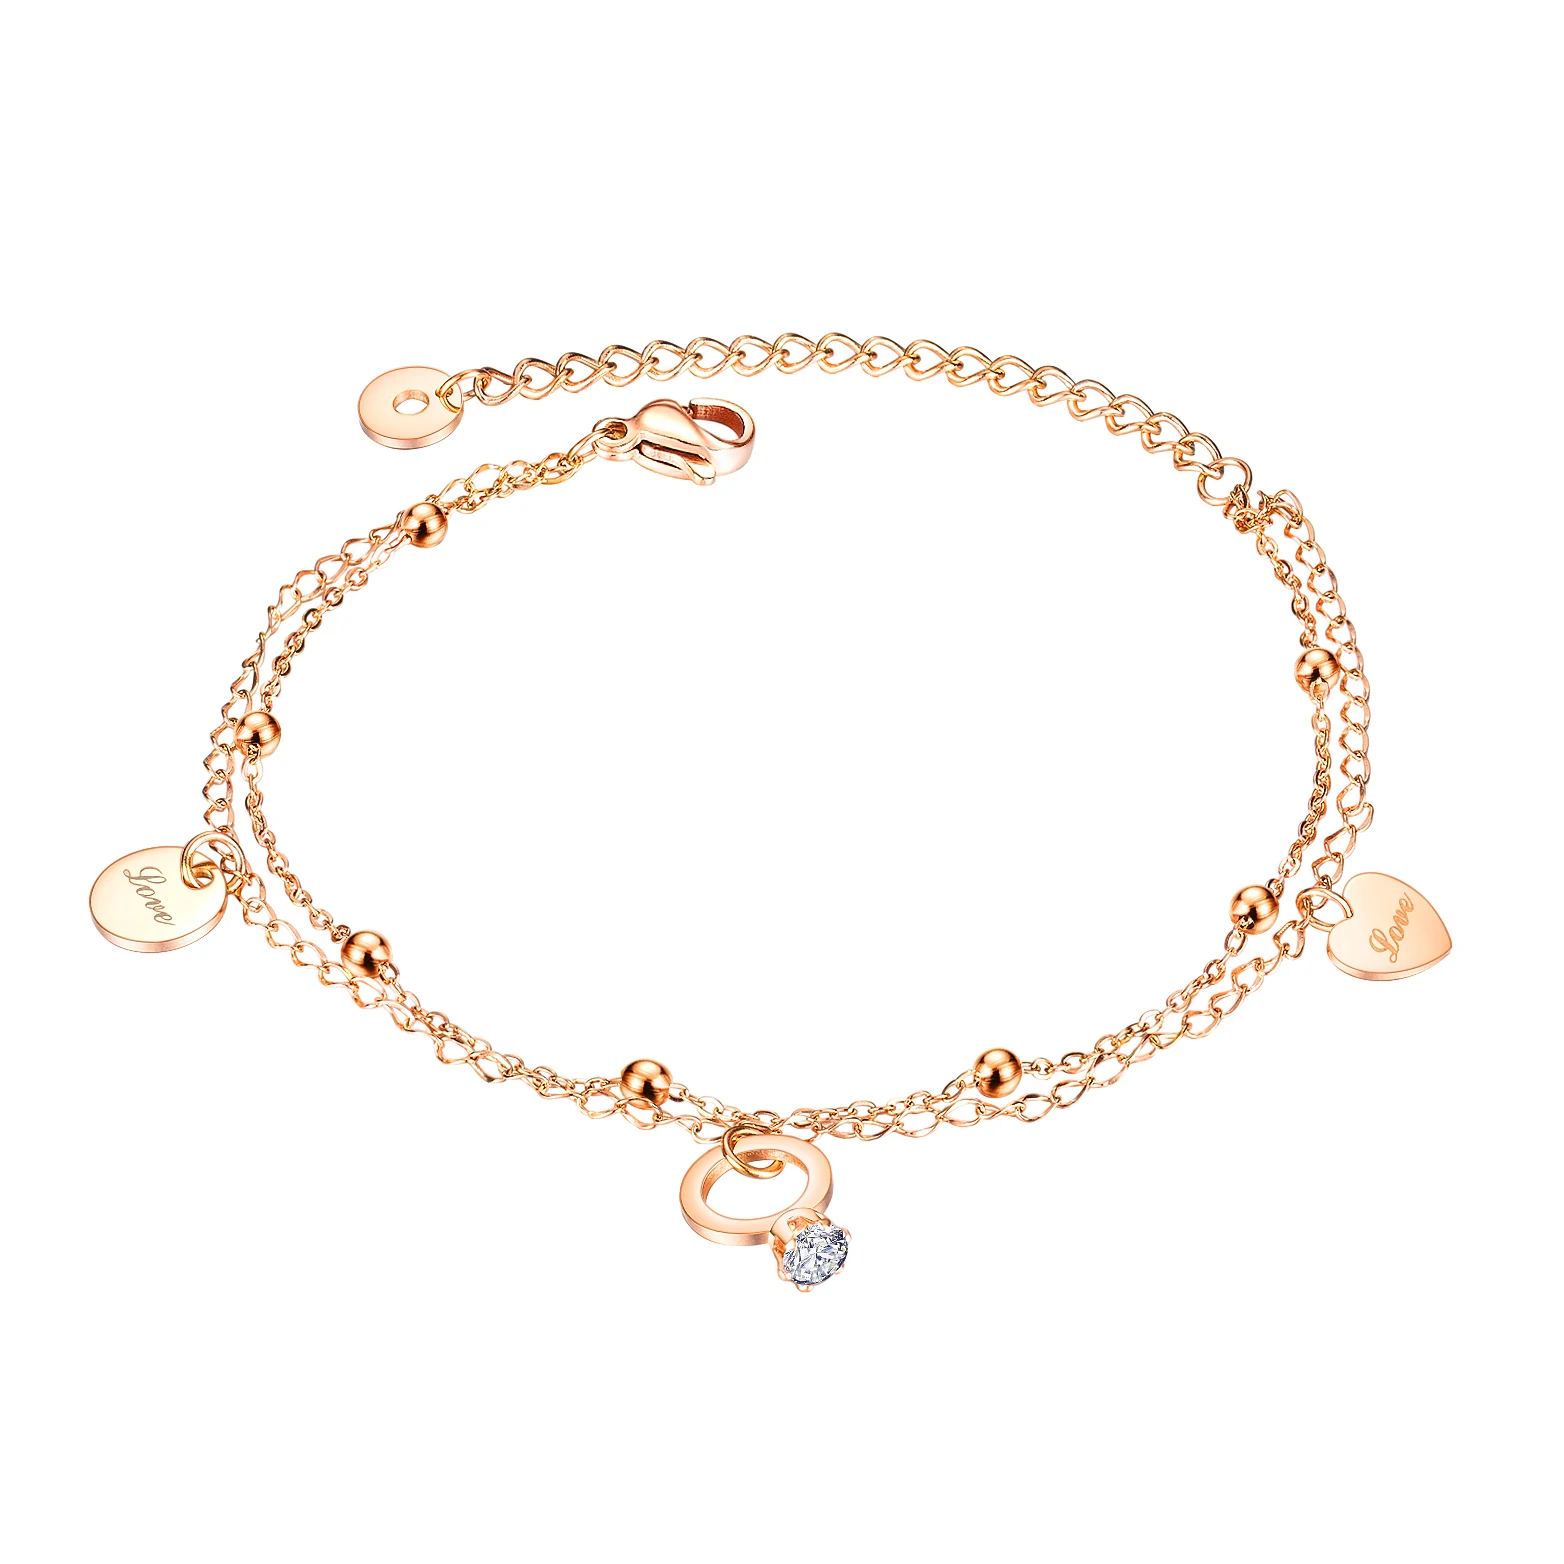 

Kpop Round Heart Beads Zirconia Bracelets For Women 2020 Fashion Stainless Steel Layered Chain Cuff Jewelry Accessories Bracelet